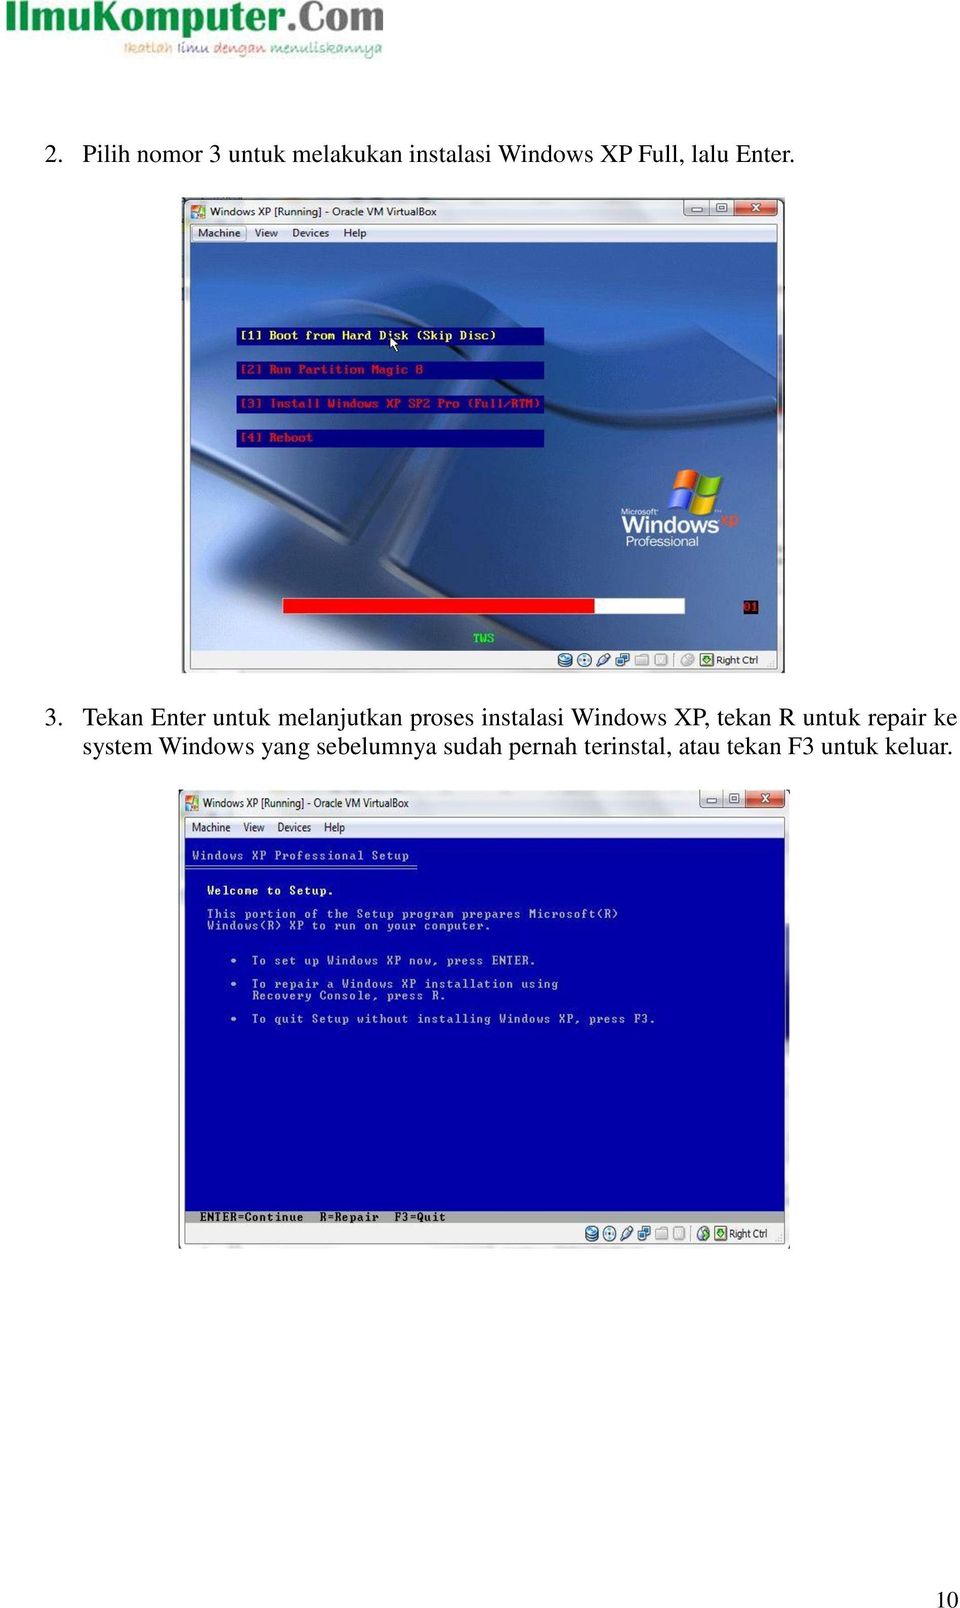 Tekan Enter untuk melanjutkan proses instalasi Windows XP,